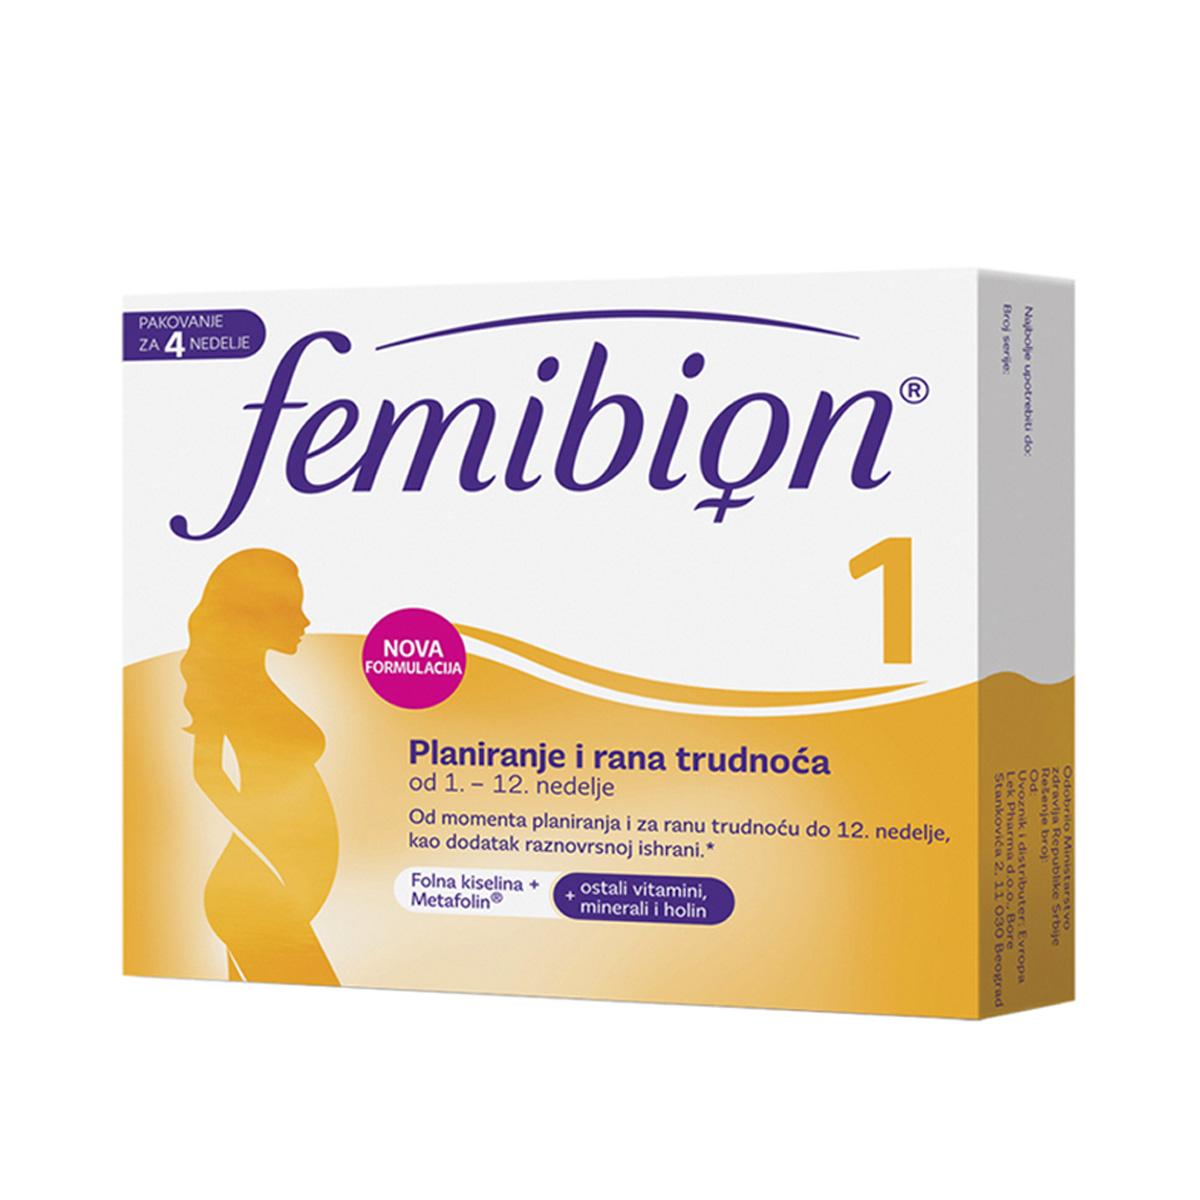 Selected image for MERCK Femibion 1 za planiranje i ranu trudnoću 100364